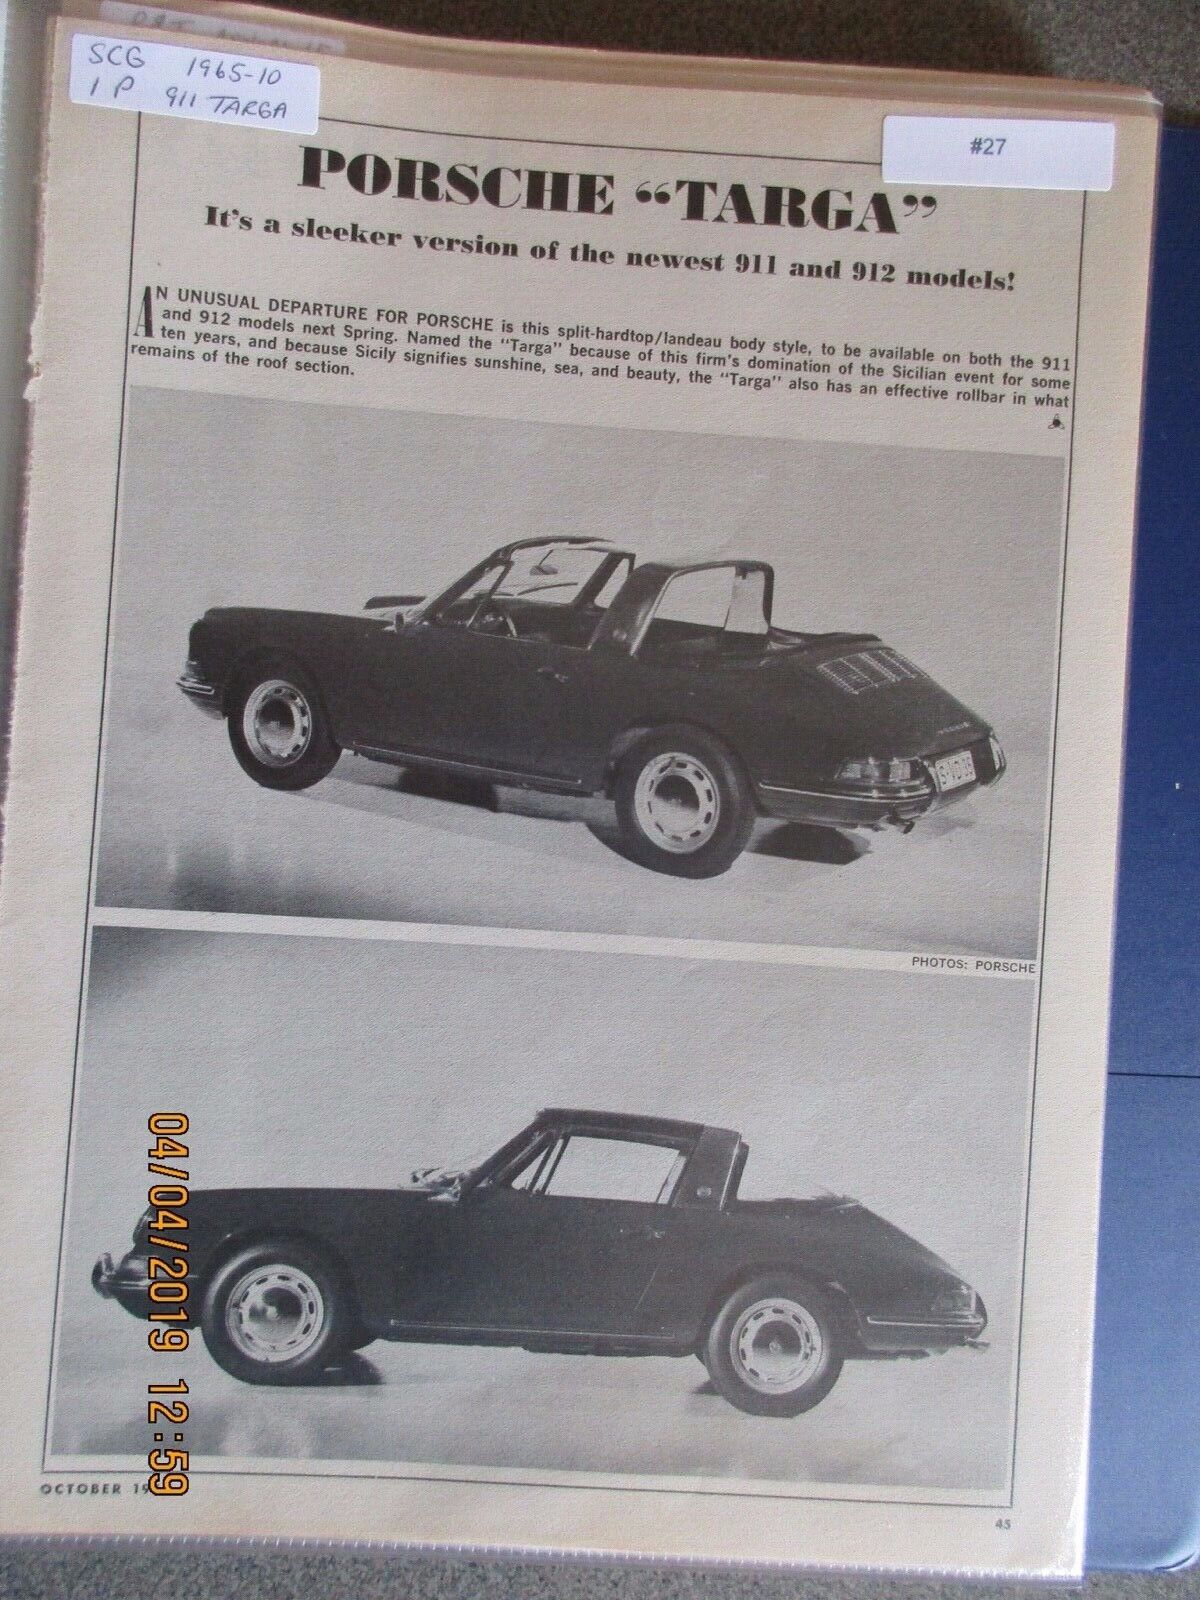 #027 Porsche Article or Road Test 1965 Porsche 911/912 Targa, 1 page Pictorial